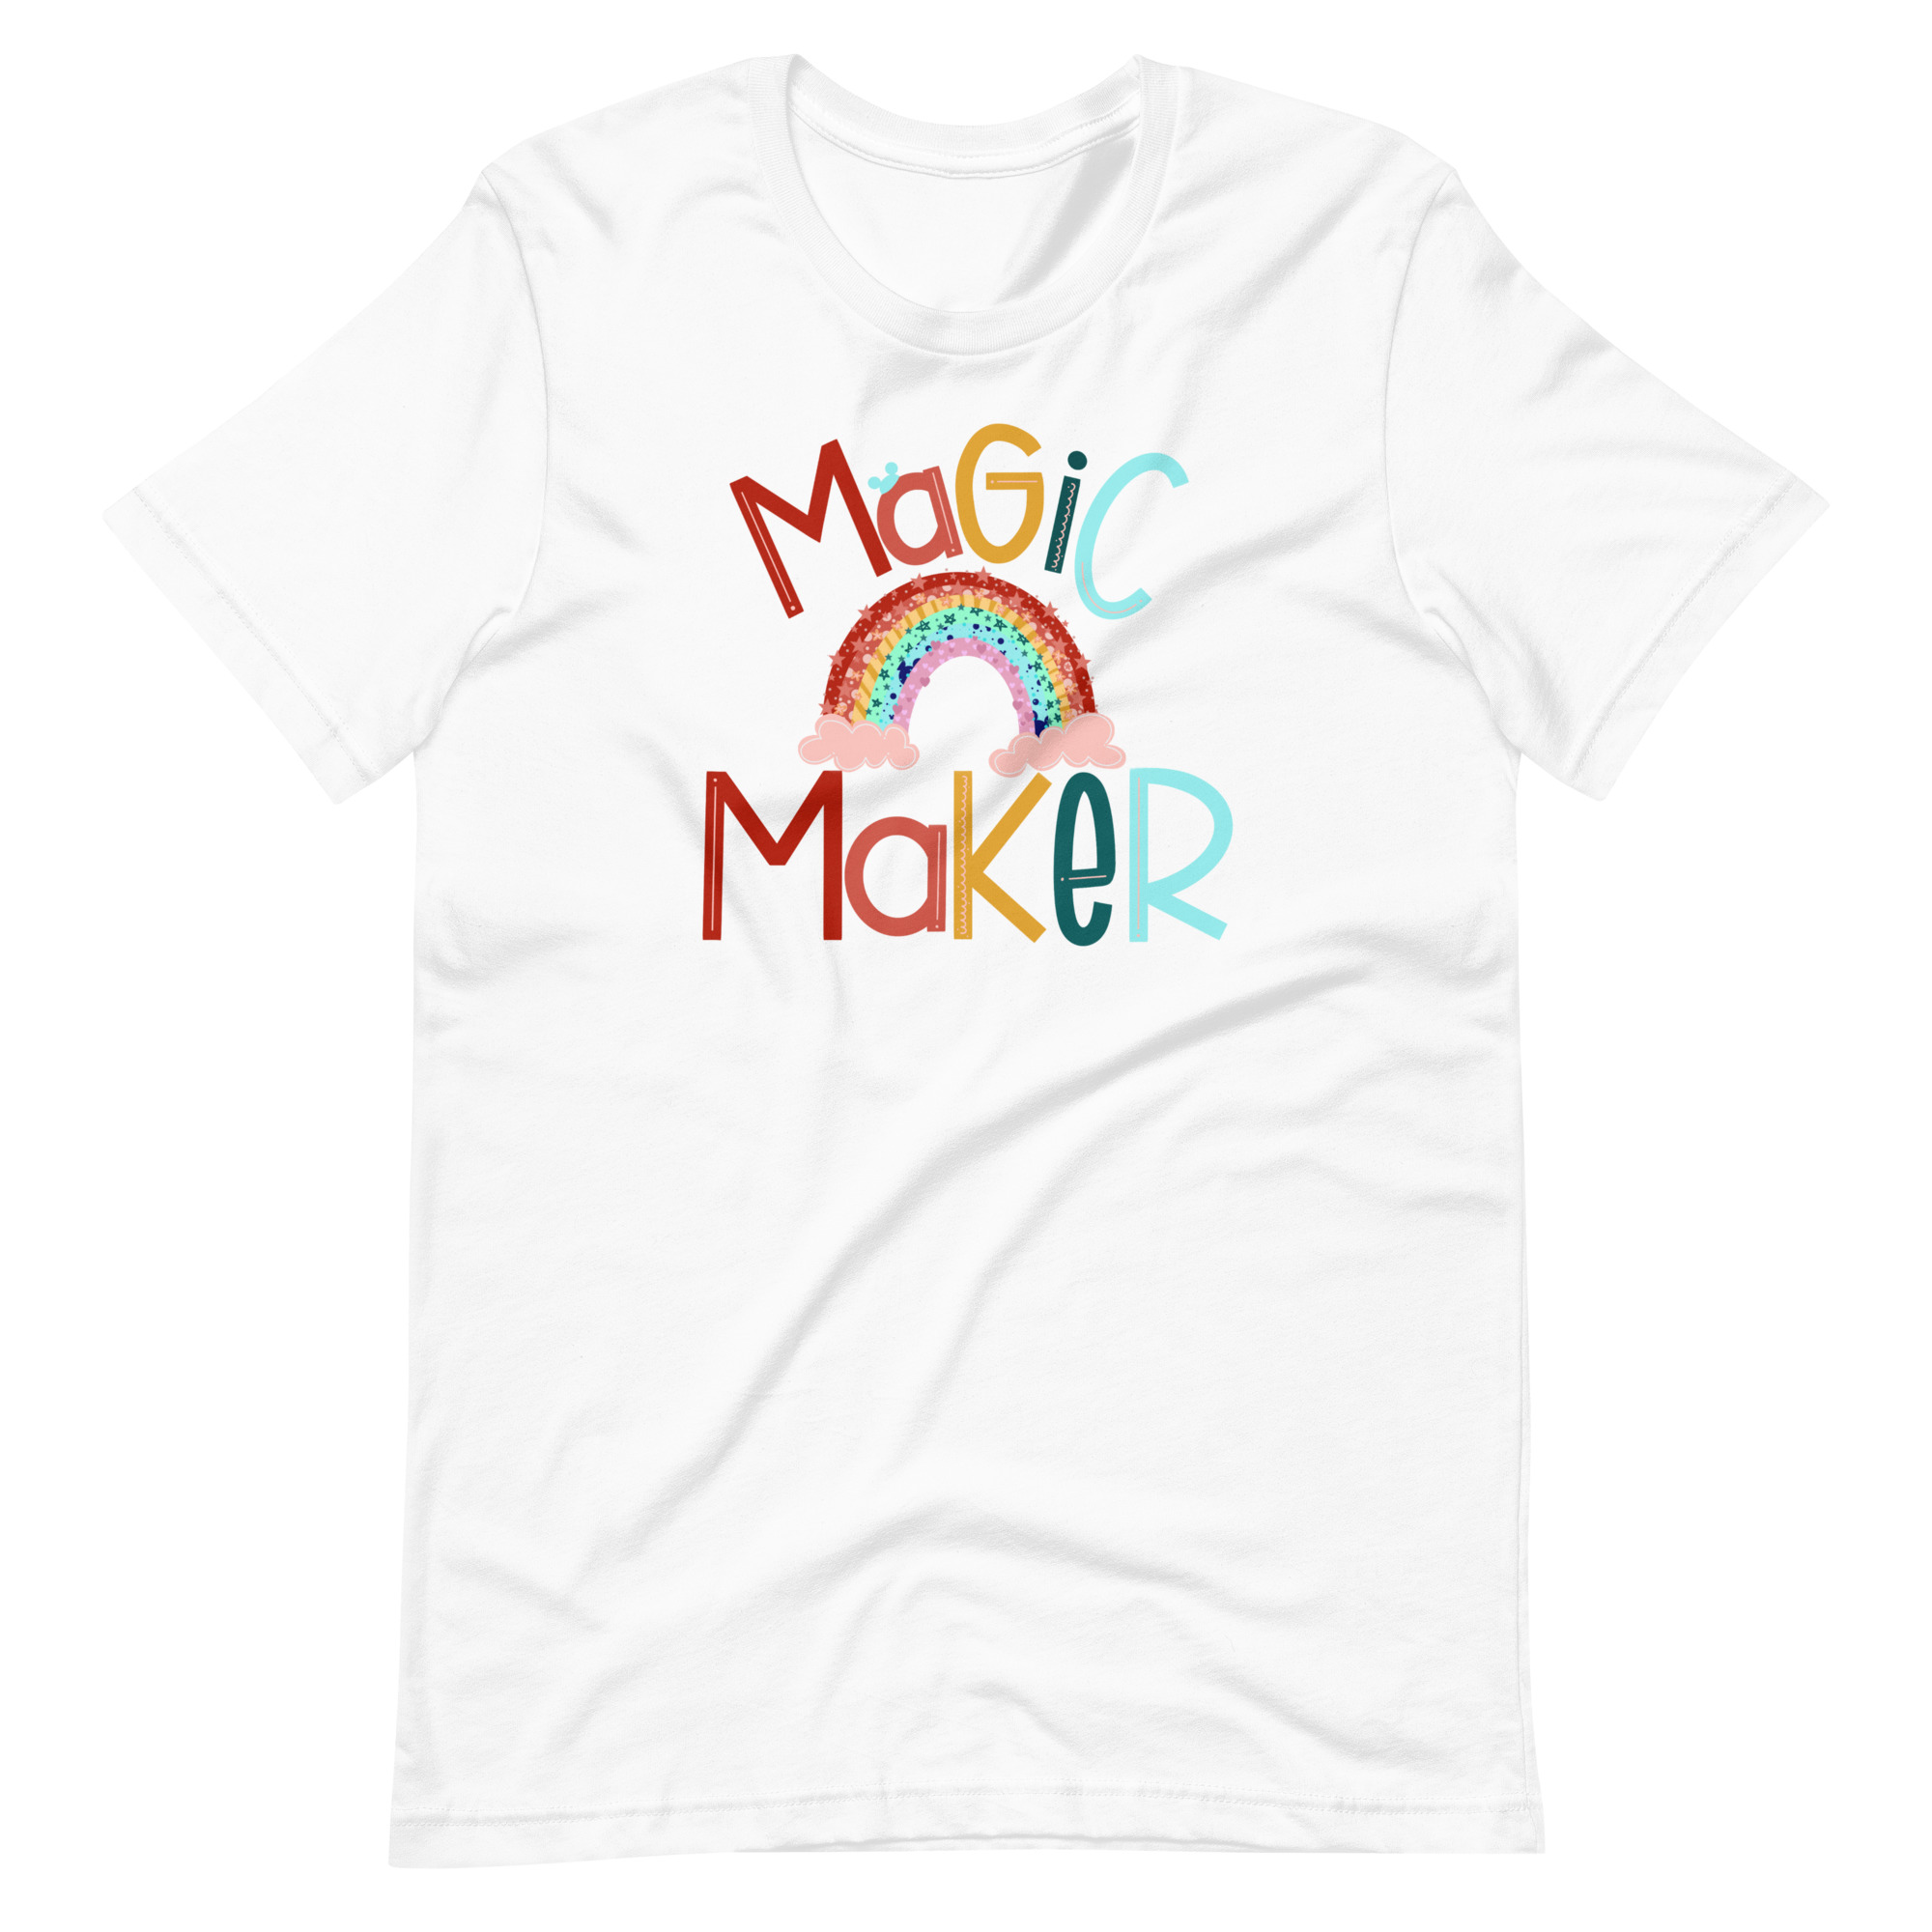 https://magicformiles.com/wp-content/uploads/2022/09/unisex-staple-t-shirt-white-front-6318bdd15689c.jpg